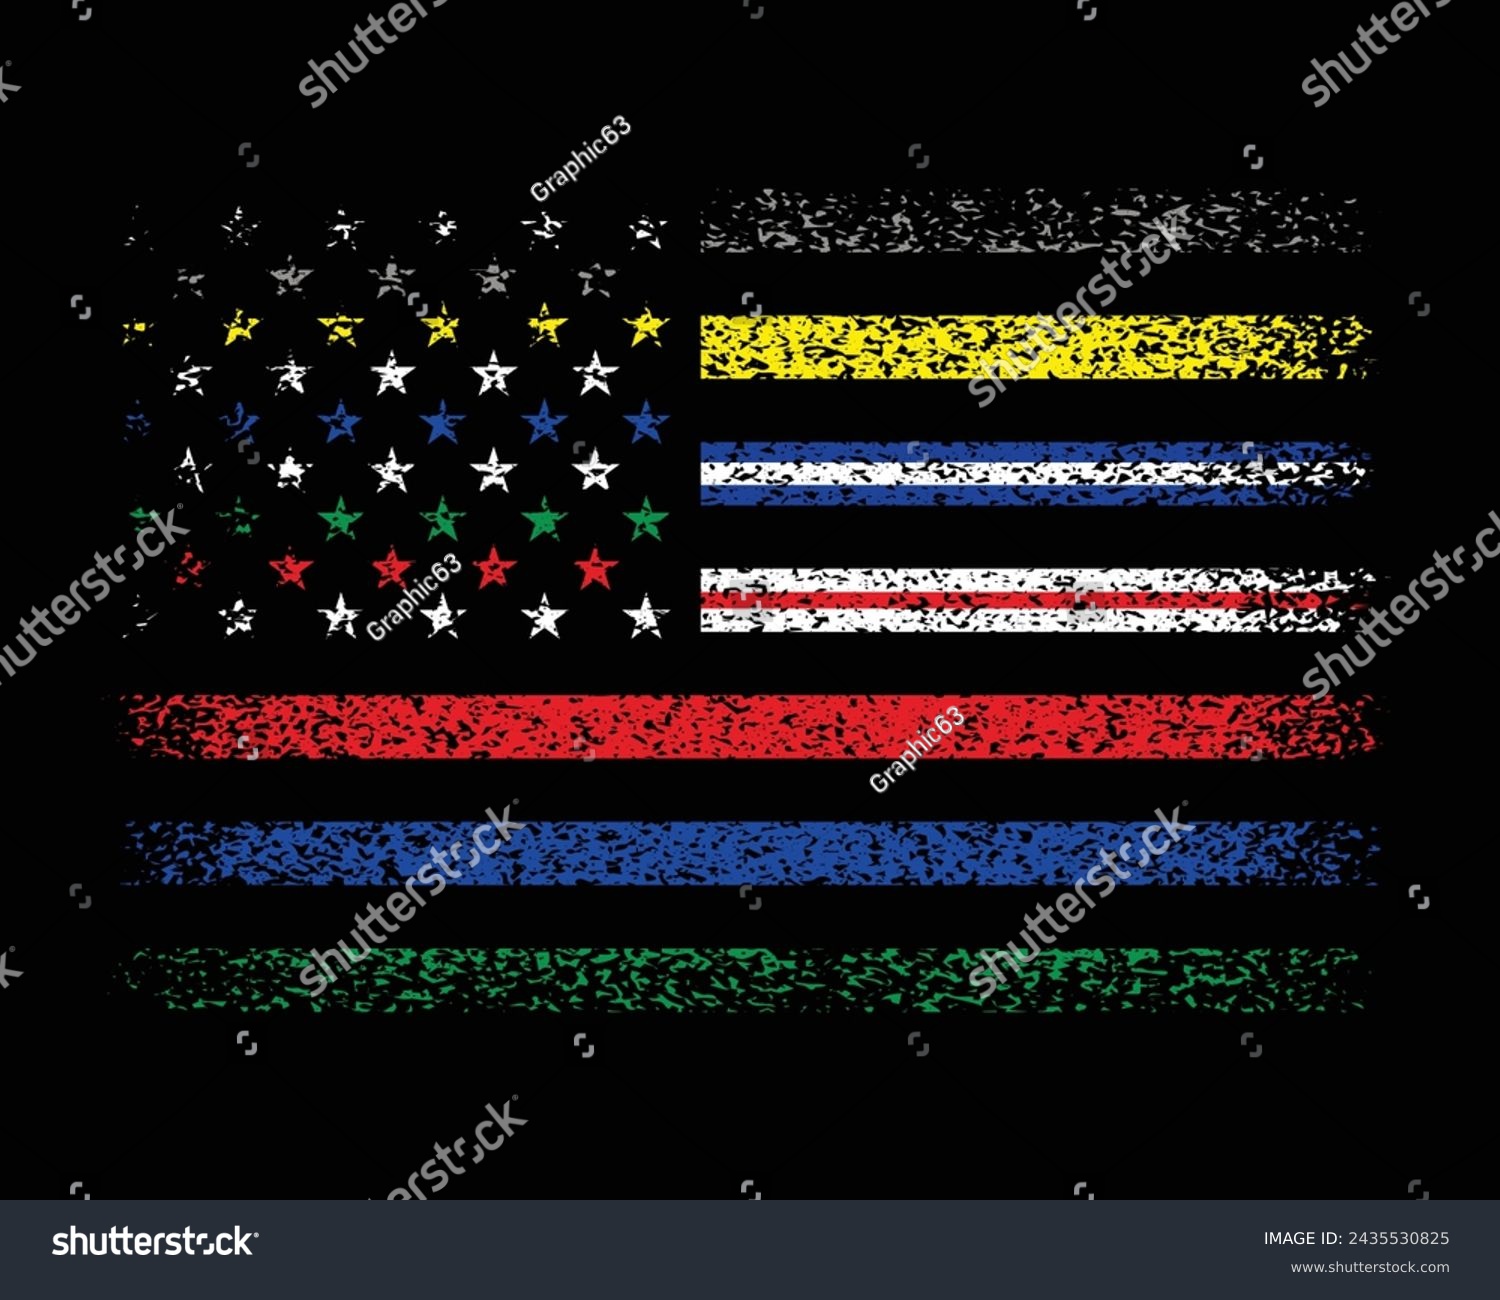 SVG of First Responders Police Military Firefighter Nurse Ems Dispatch Correction American Usa Flag Design For T Shirt Poster Banner Backround Print Vector Illustration. svg